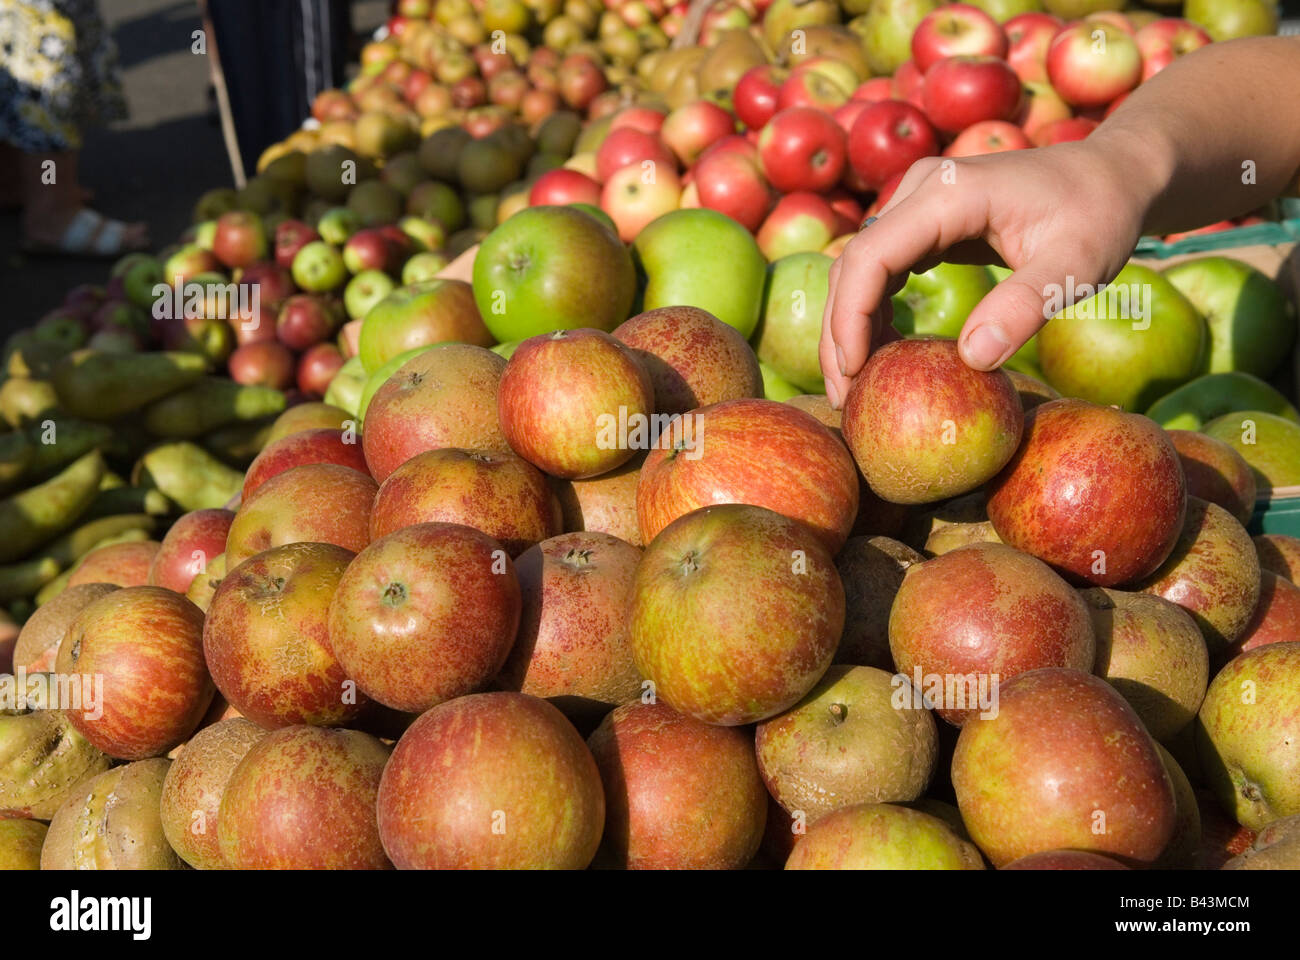 Farmers Market South East London Organic Coxs apples Blackheath UK HOMER SYKES Stock Photo